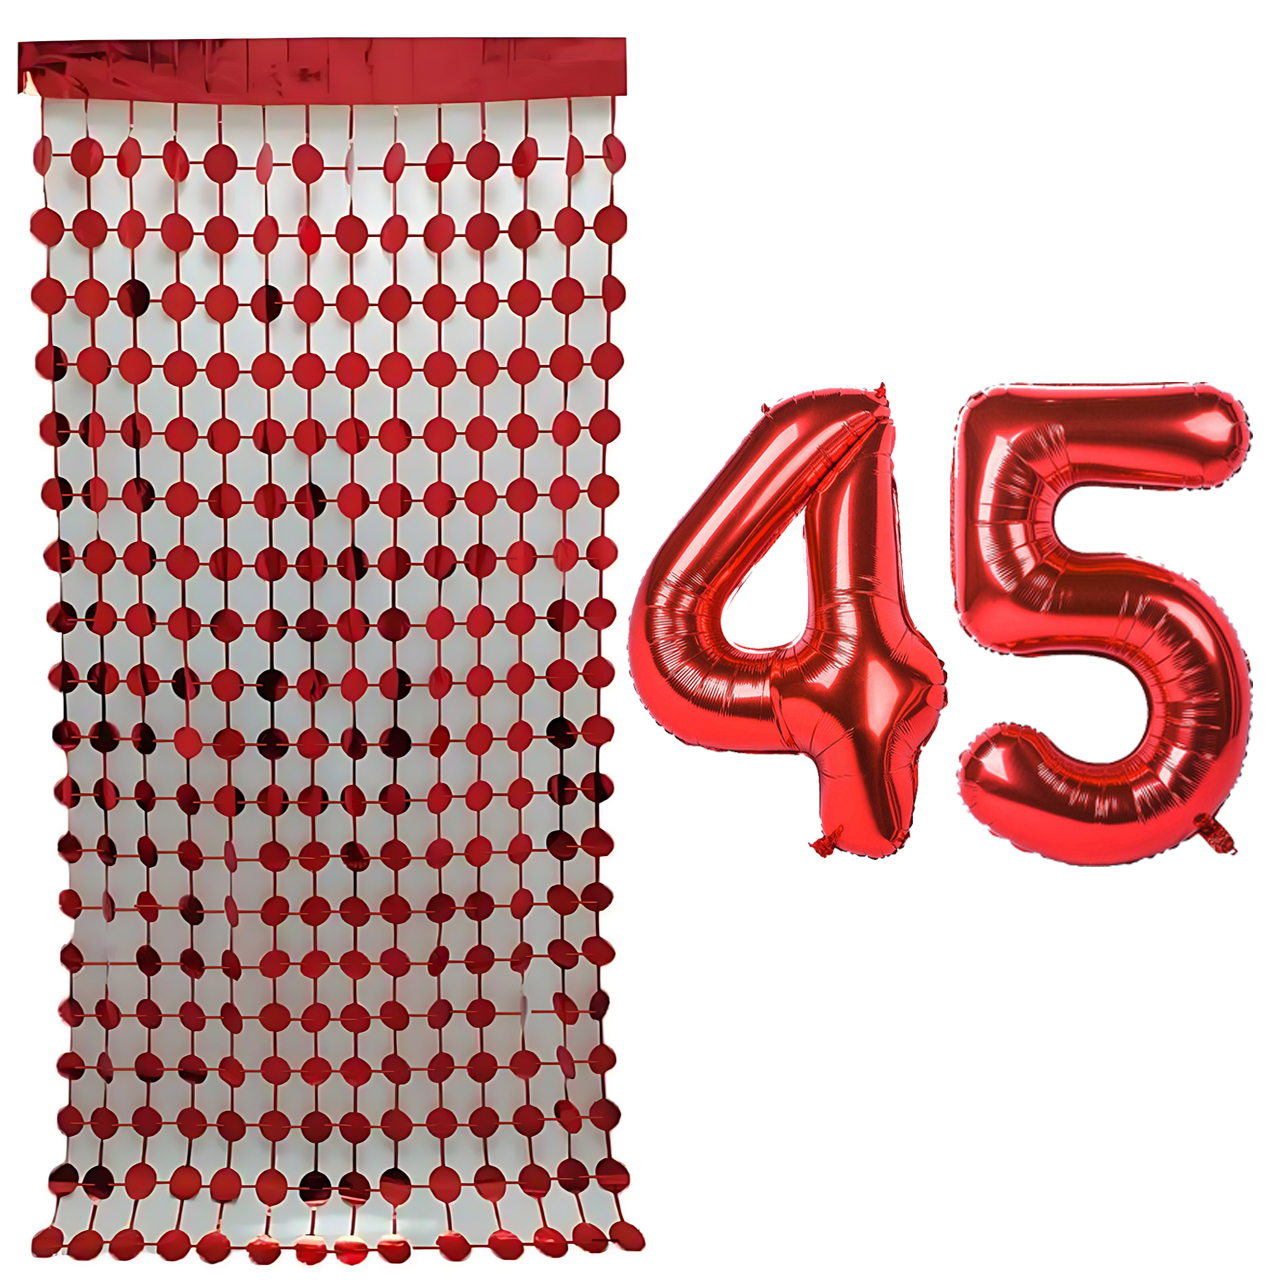 بادکنک فویلی مسترتم طرح عدد 45 به همراه ریسه تزئینی بسته 3 عددی